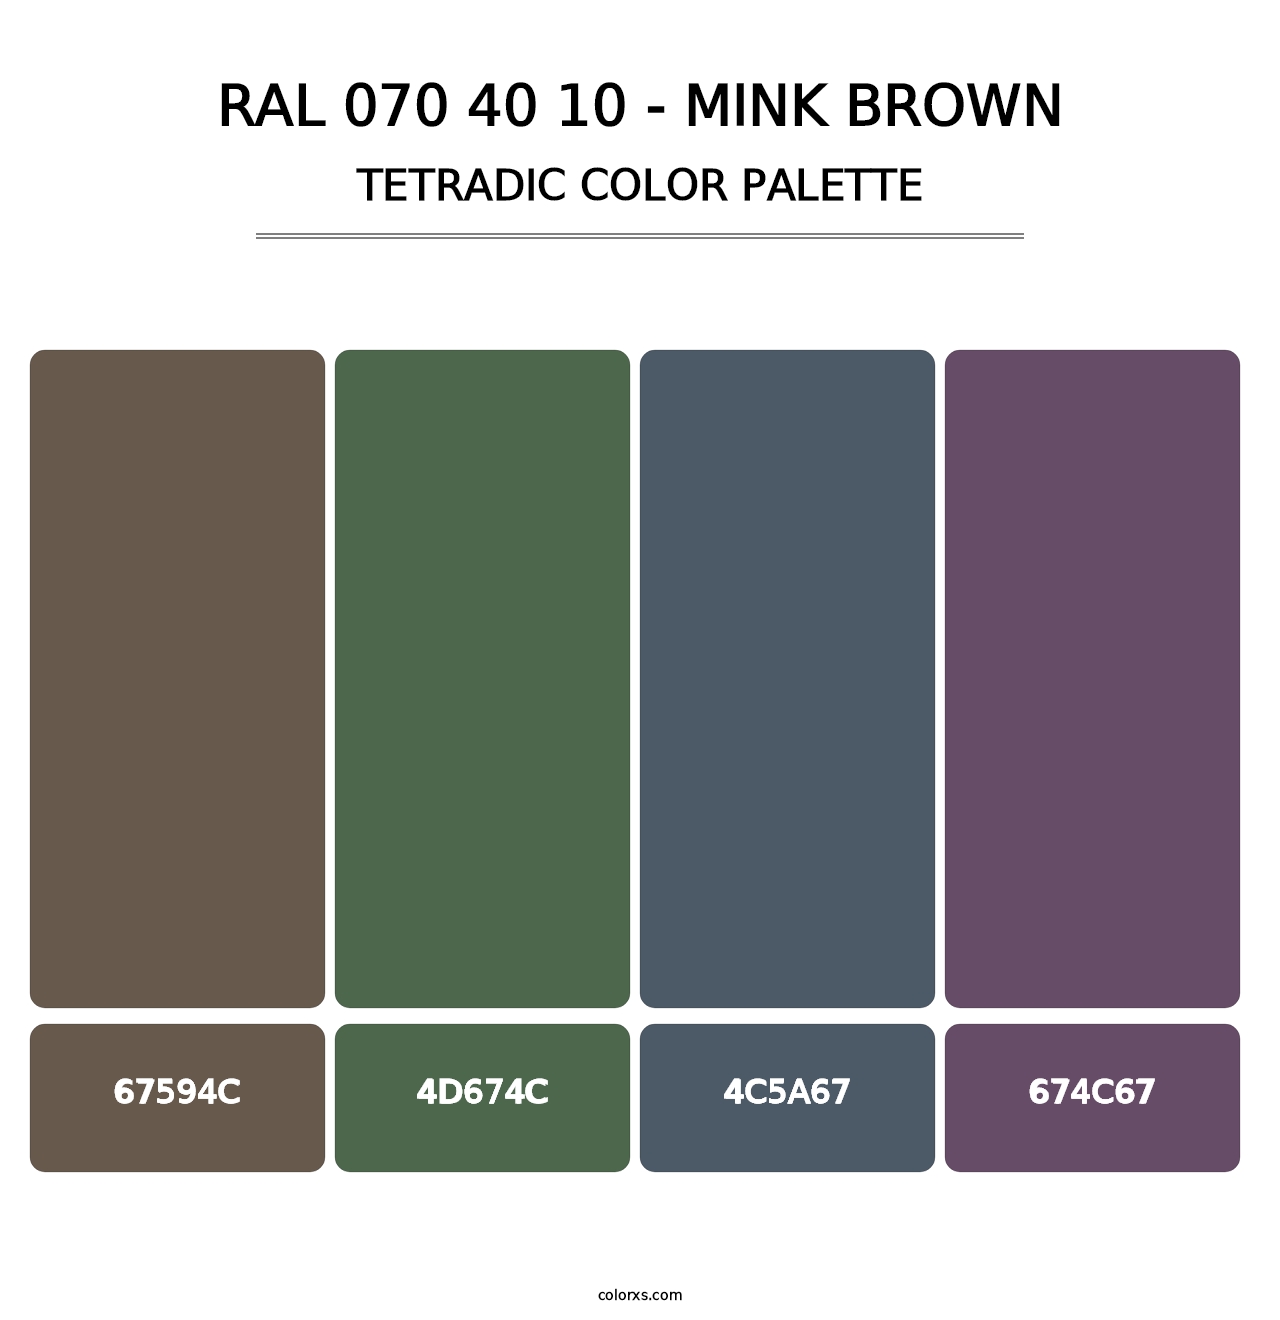 RAL 070 40 10 - Mink Brown - Tetradic Color Palette